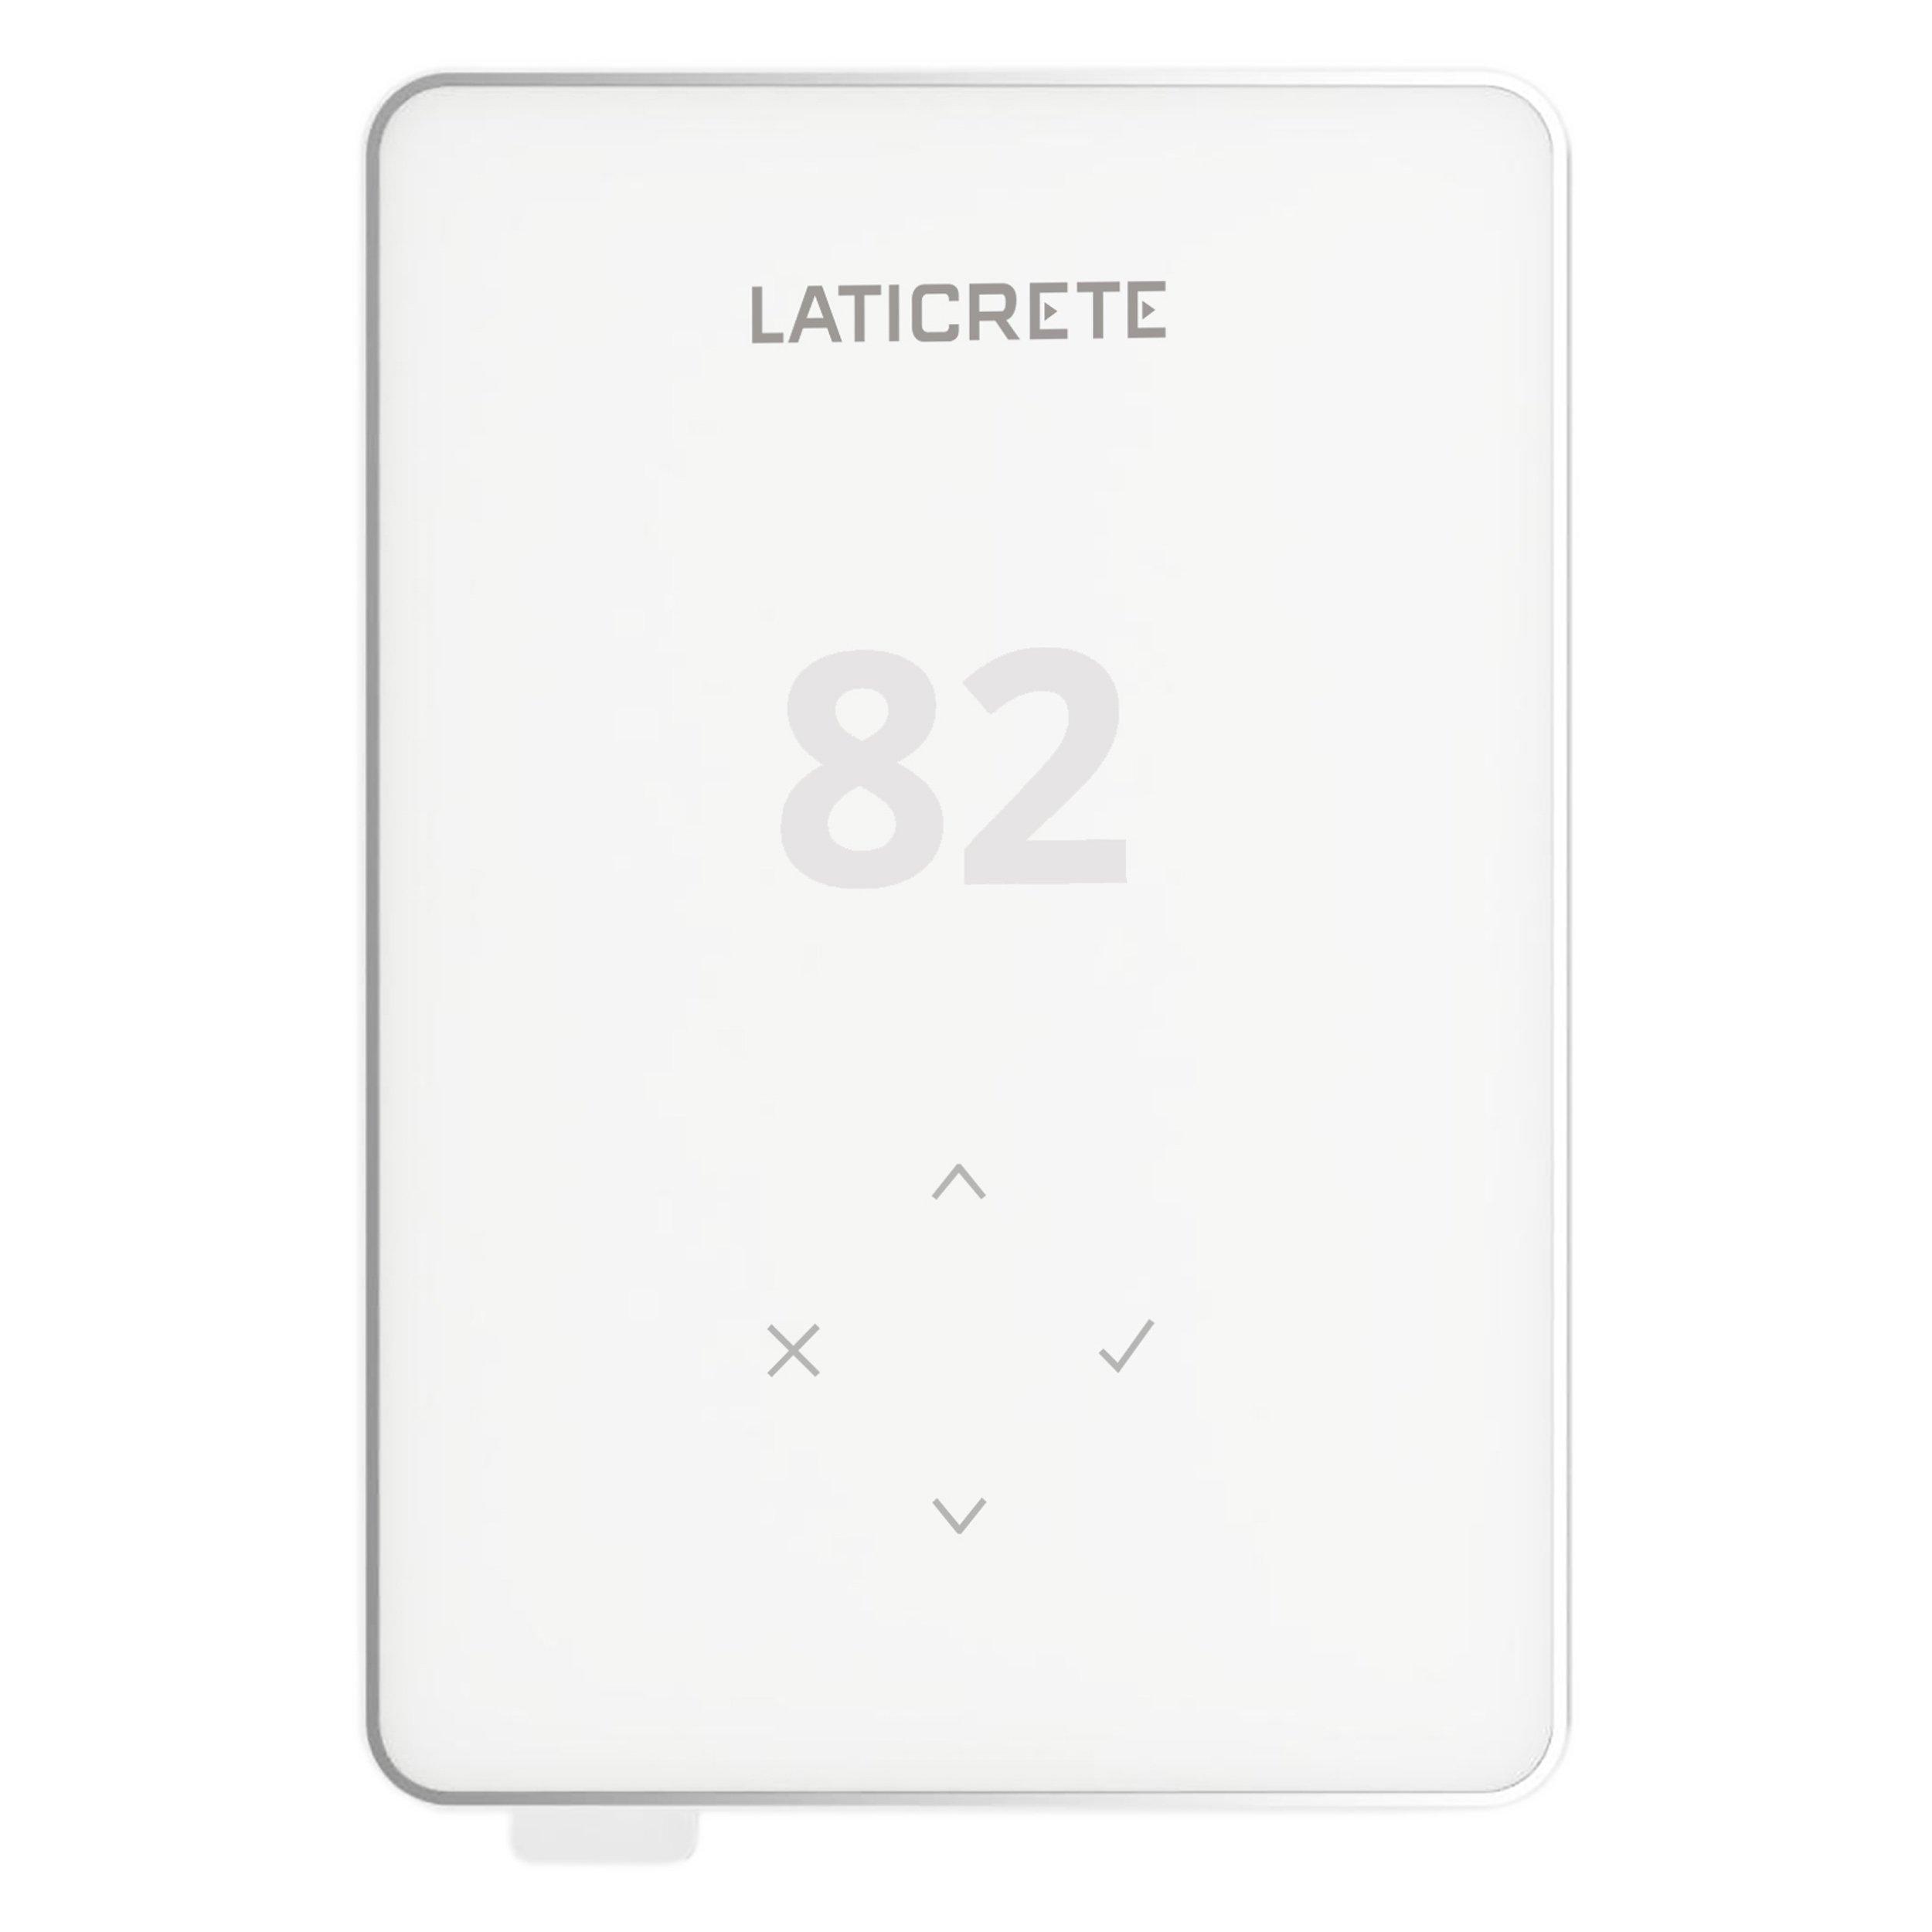 Laticrete Strata Heat Programmable Wi-Fi Thermostat